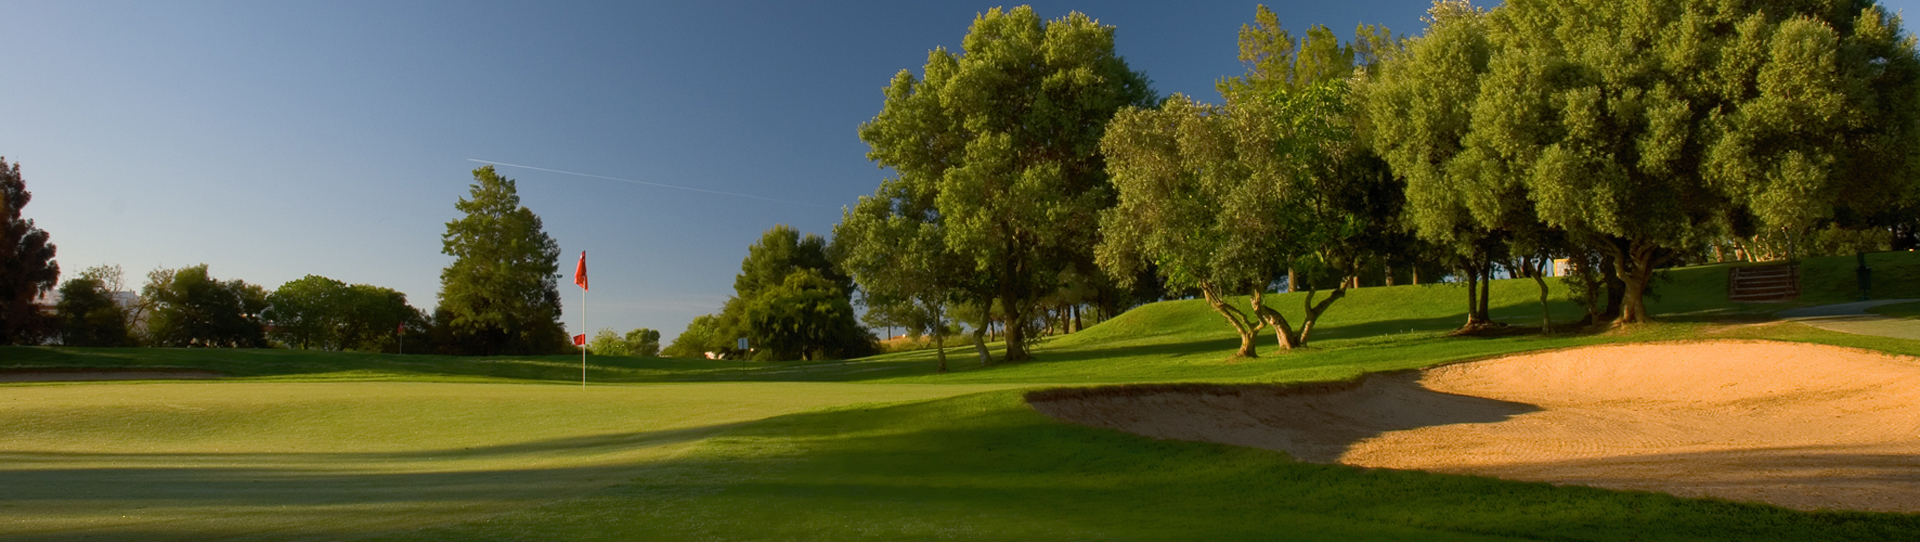 Portugal golf holidays - Pestana Algarve Golf Package   - Photo 2